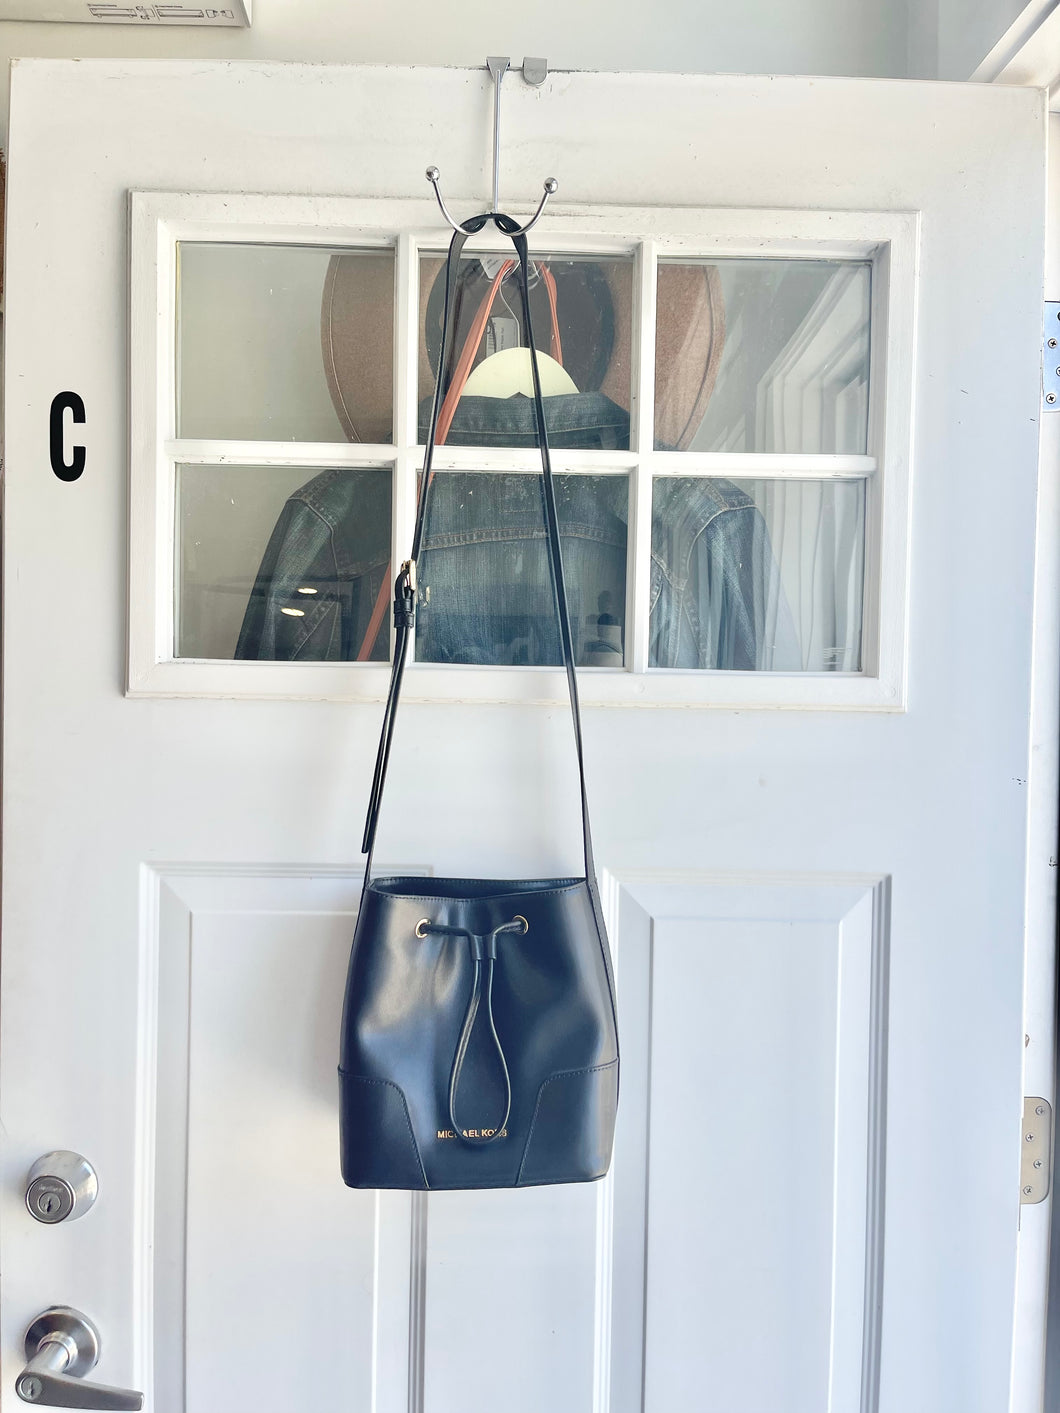 Michael Kors Black Leather Bucket Bag